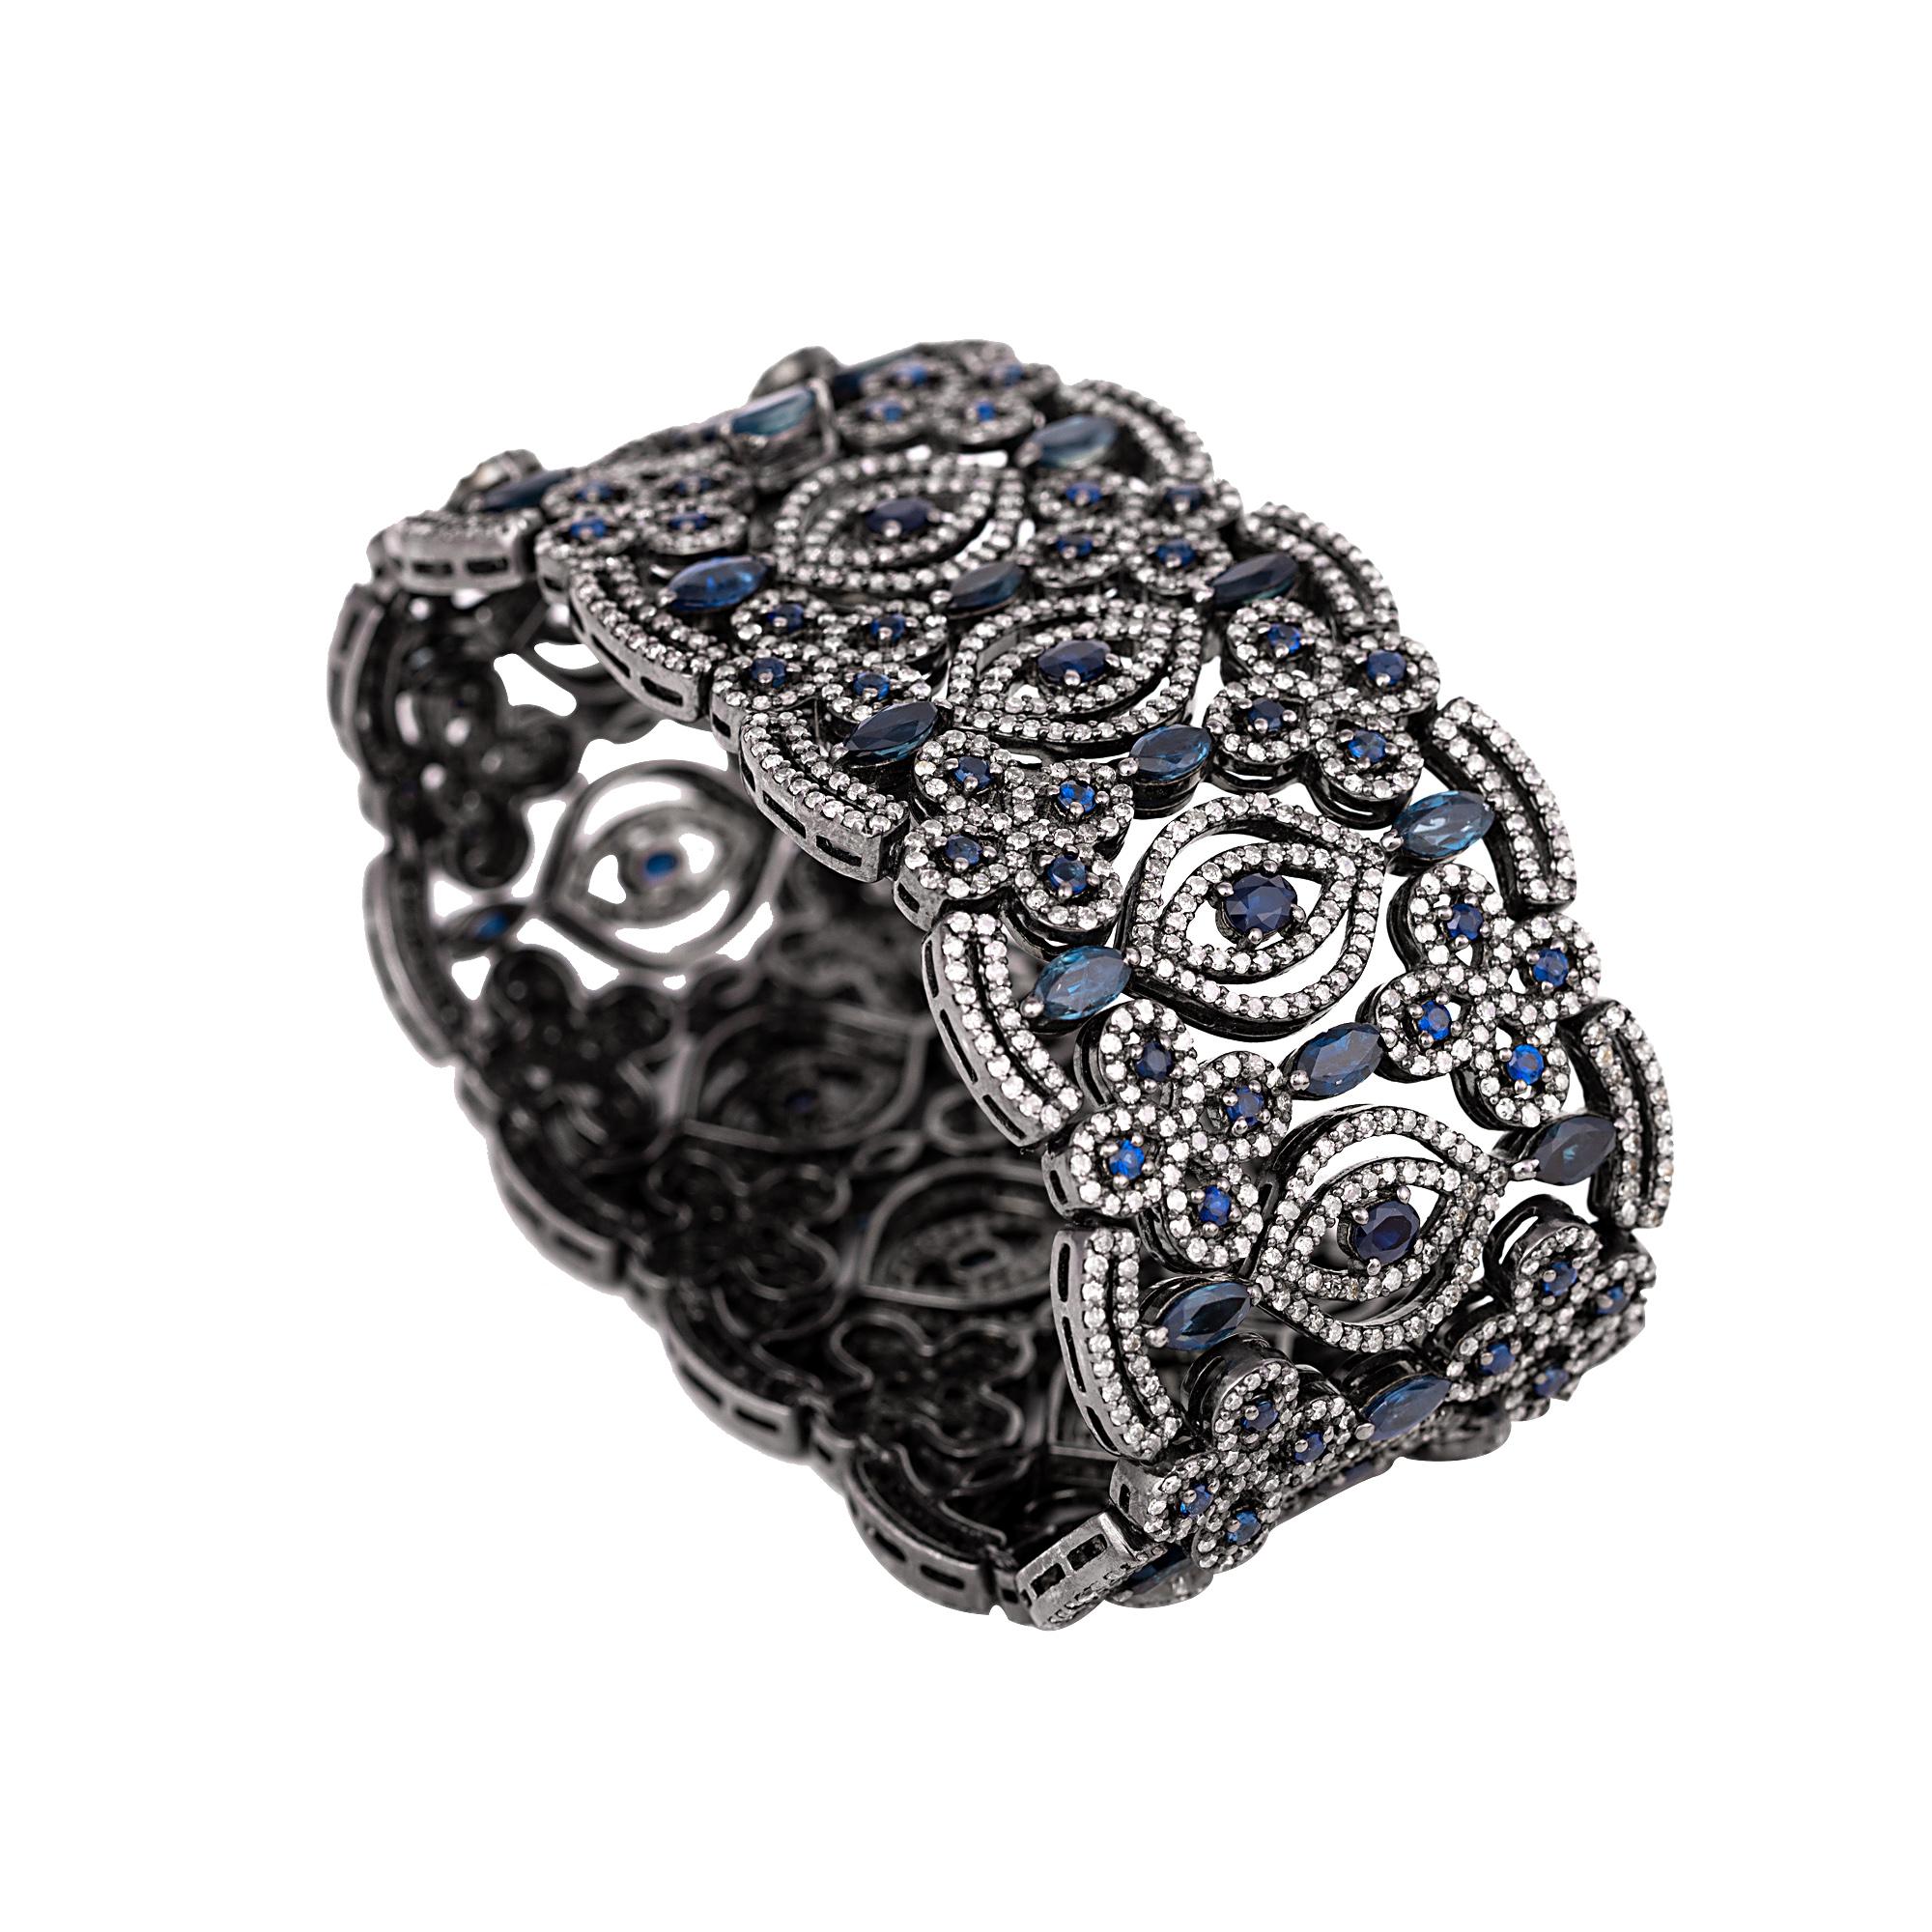 Women's 10.87 Carat Diamond and Sapphire Antique-Style Retro Bracelet